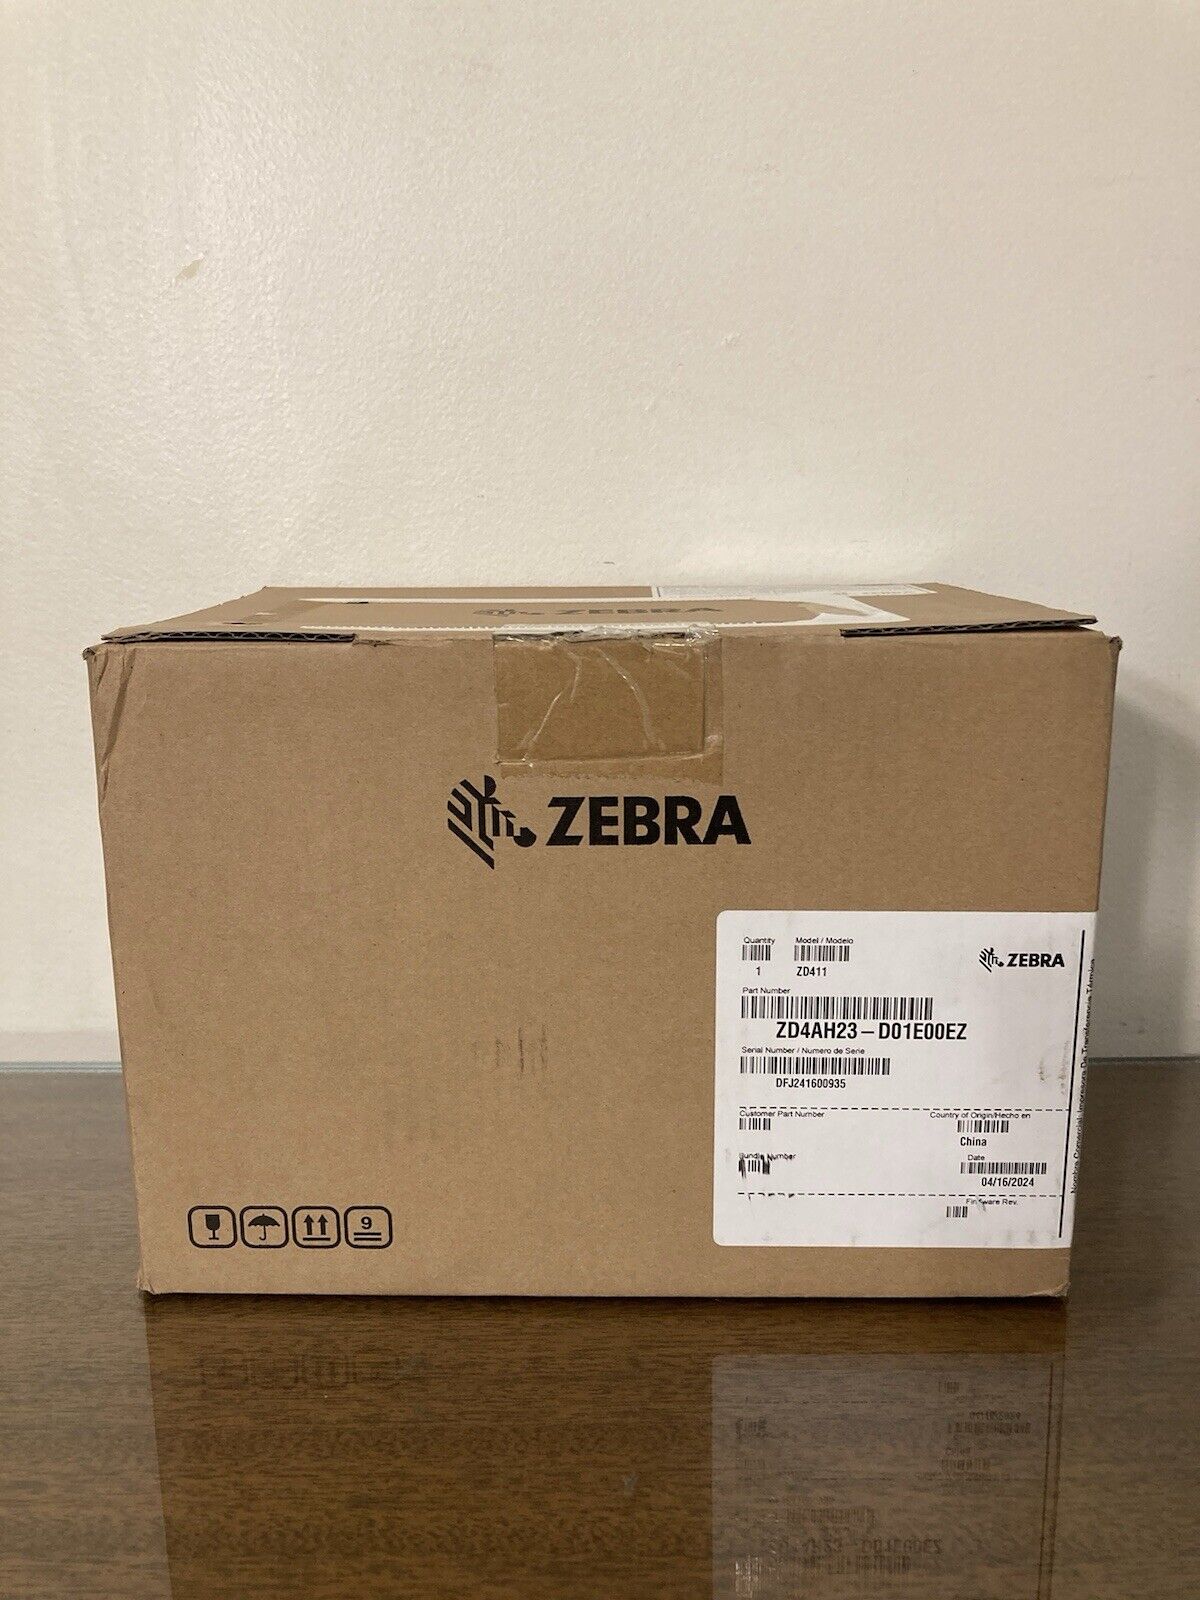 Zebra ZD411 Direct Thermal Ethernet Healthcare 300 dpi ZD4AH23 - White